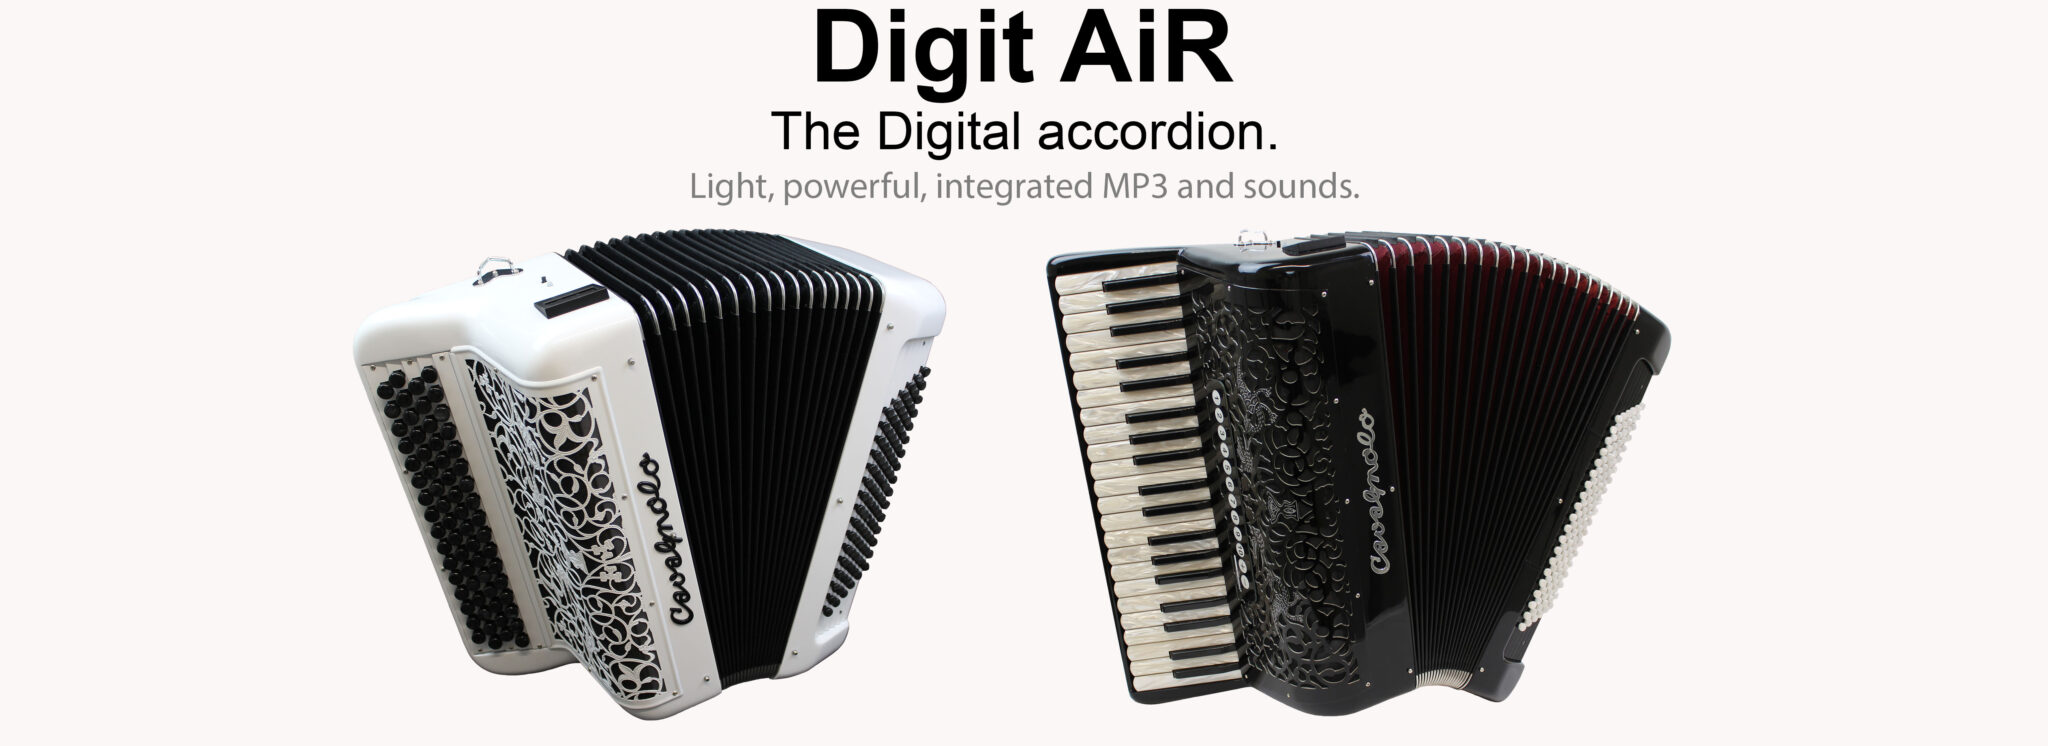 Digit AiR, numeric, Digital accordion